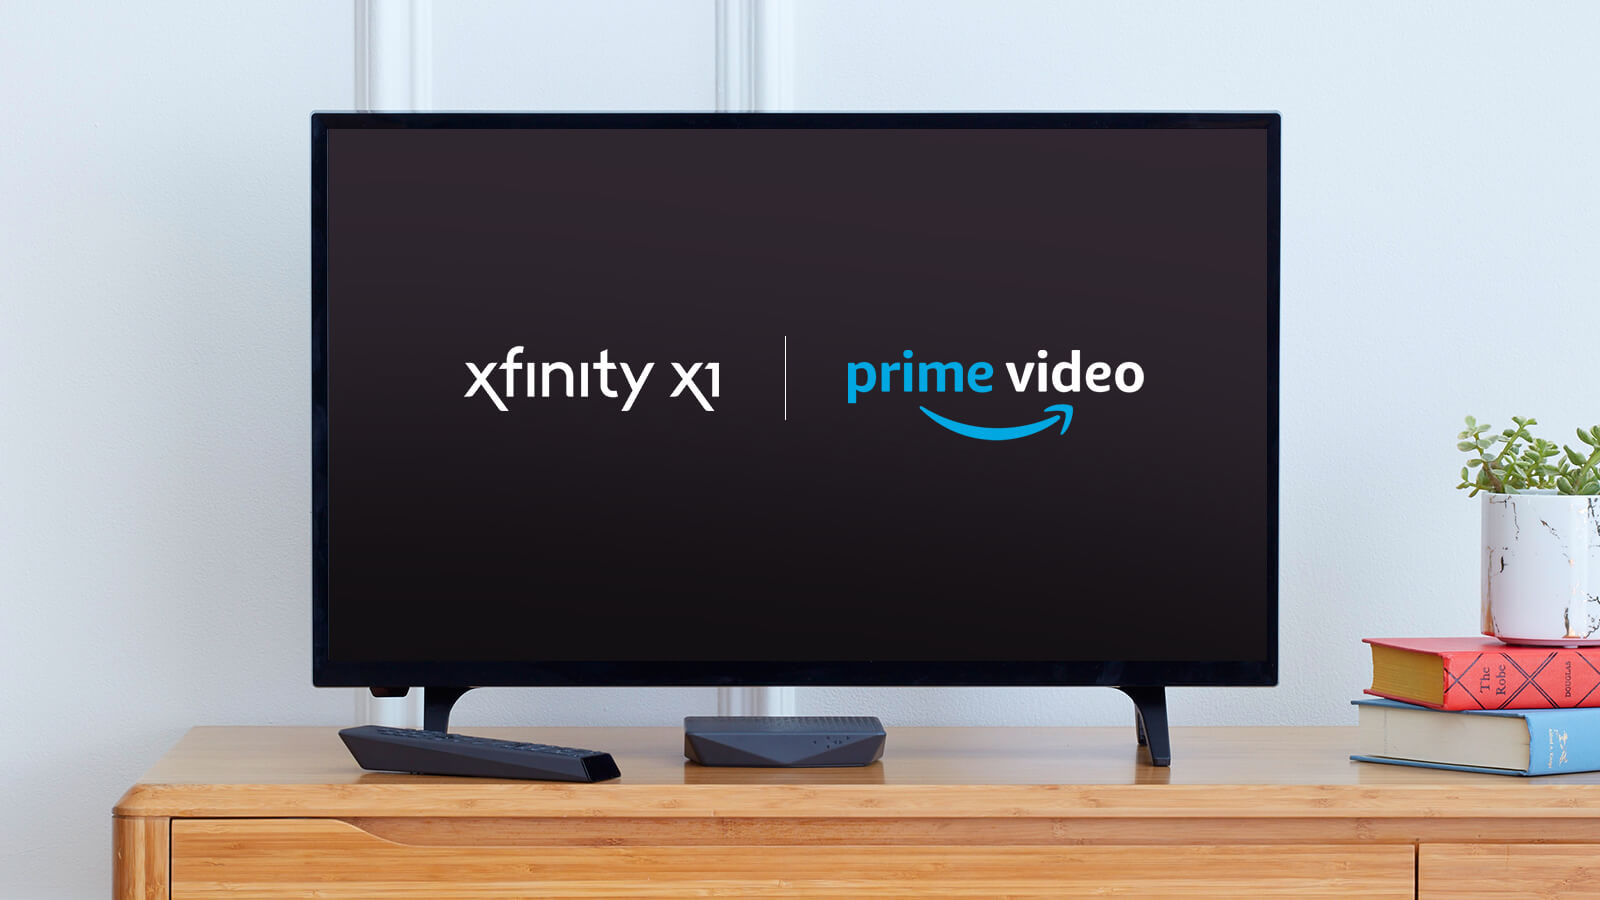 Comcast is integrating Amazon Prime Video into Xfinity X1